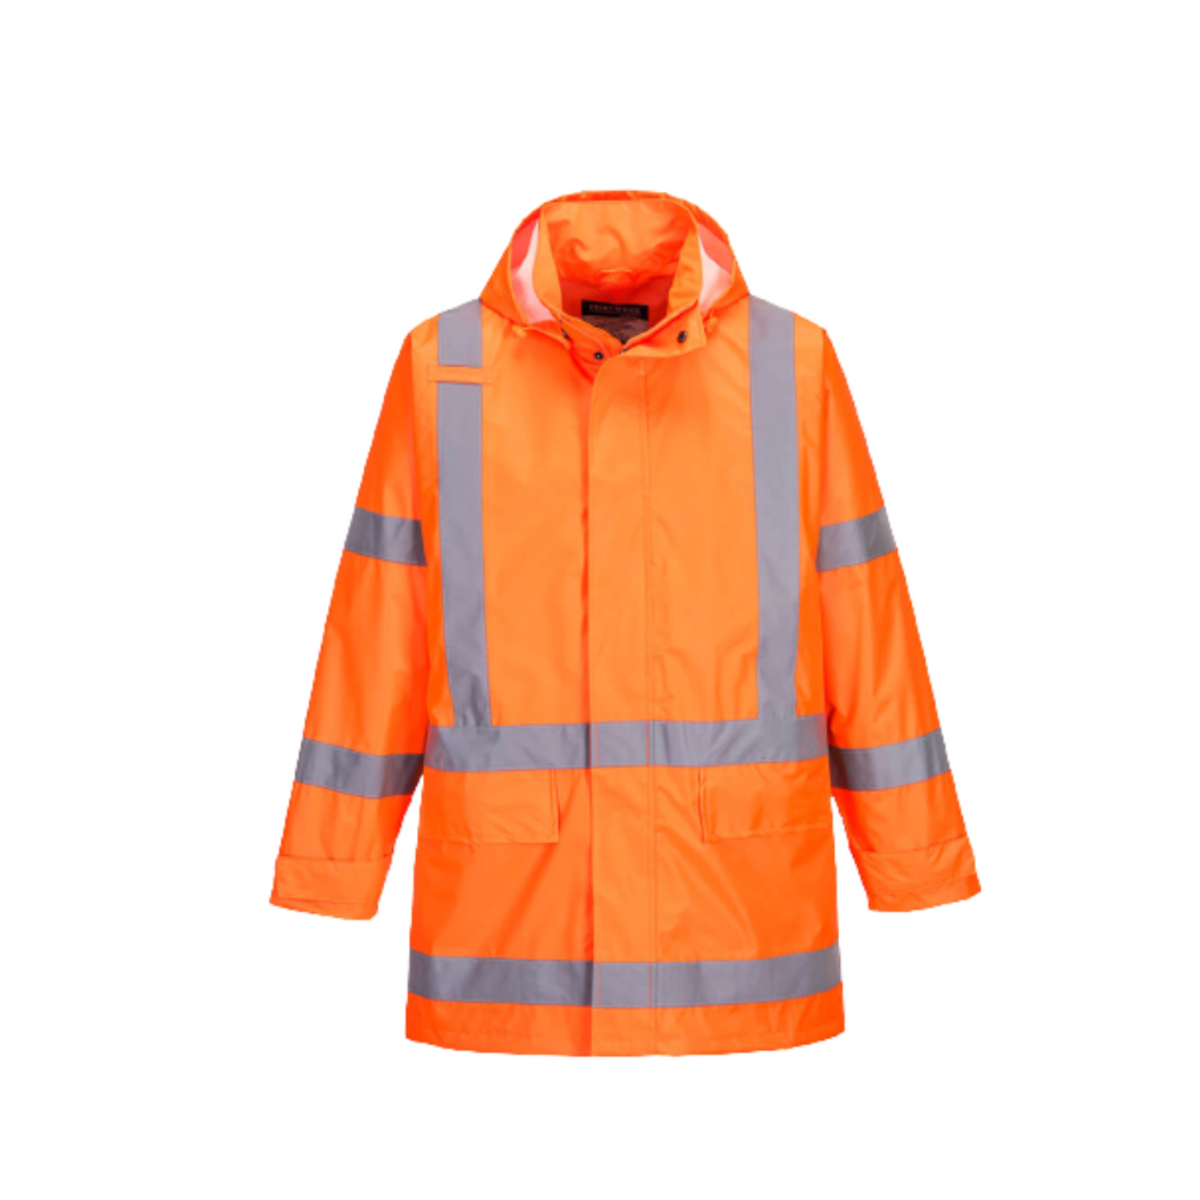 Portwest TTMC-W17 X-Back Rain Jacket 2 Tone Reflective Tape Work Safety TM610-Collins Clothing Co